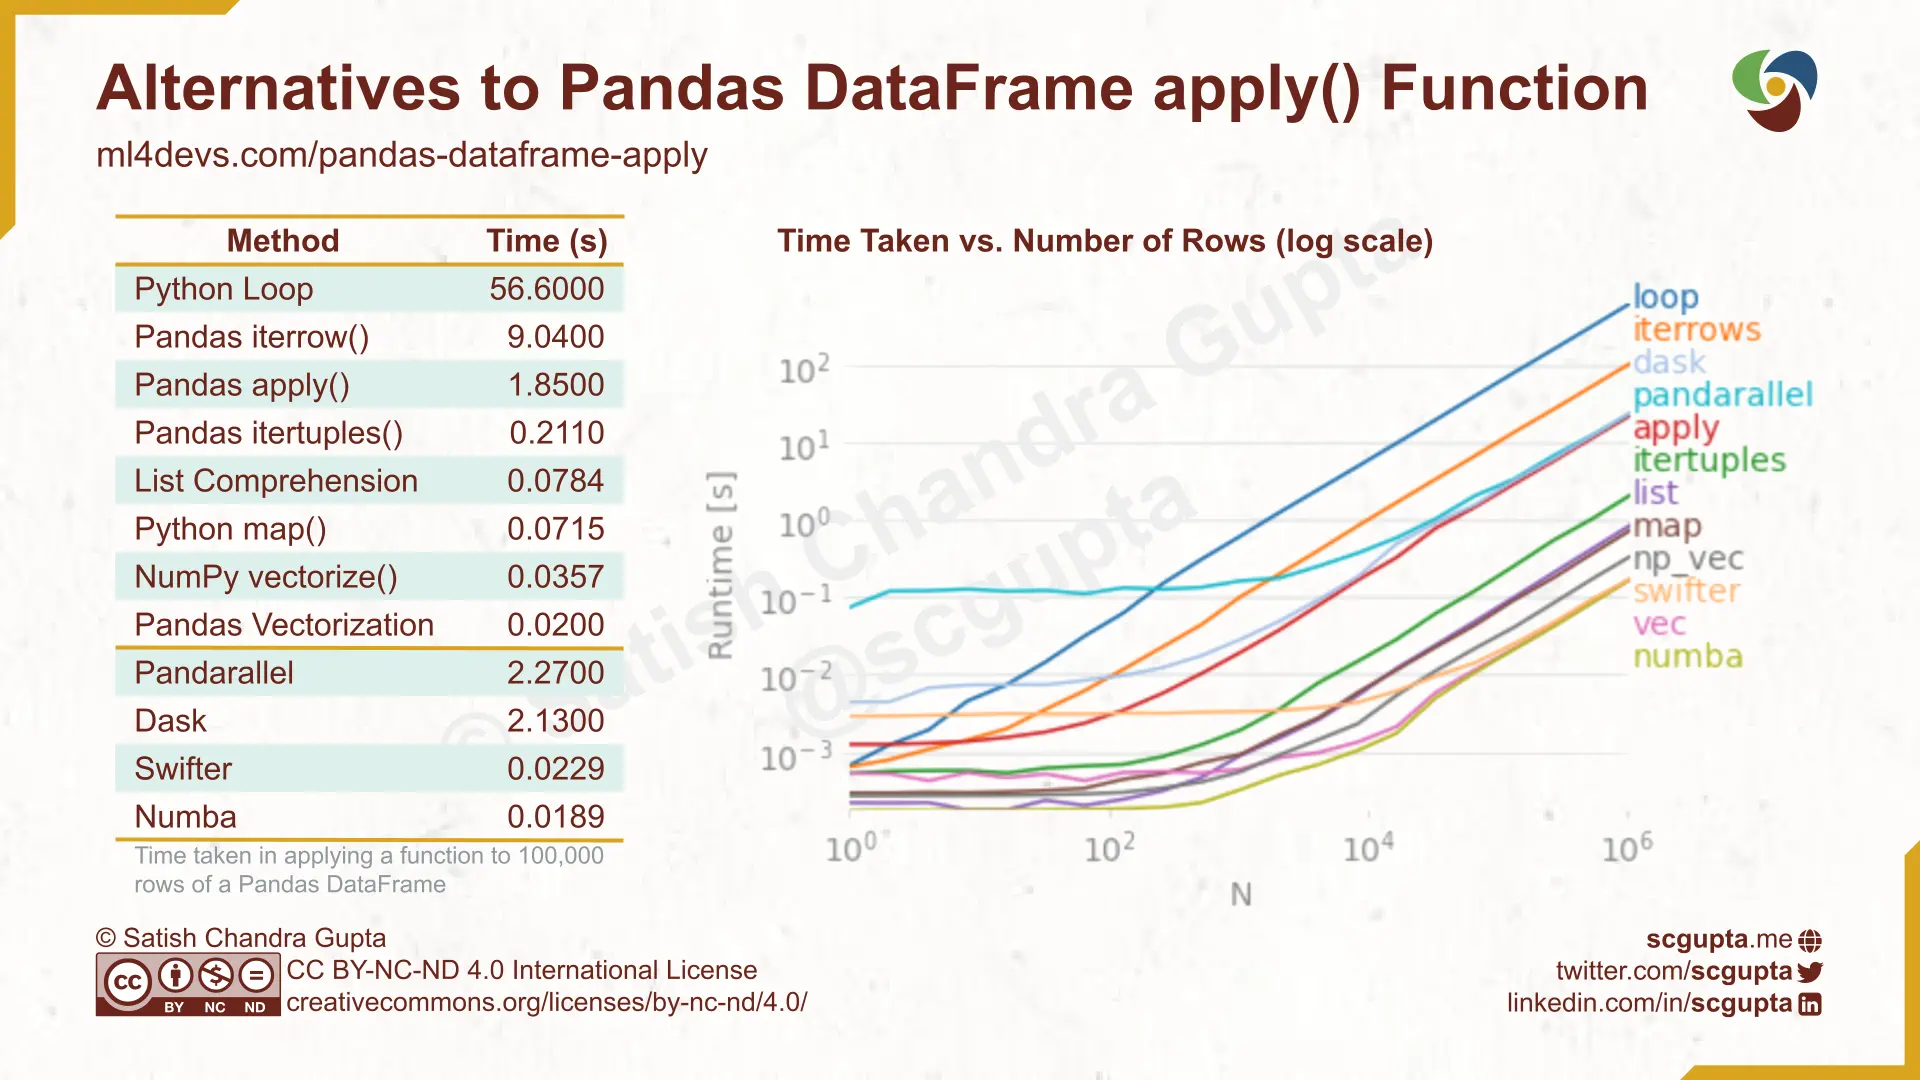 erformance comparison of Pandas DataFrame apply function alternatives